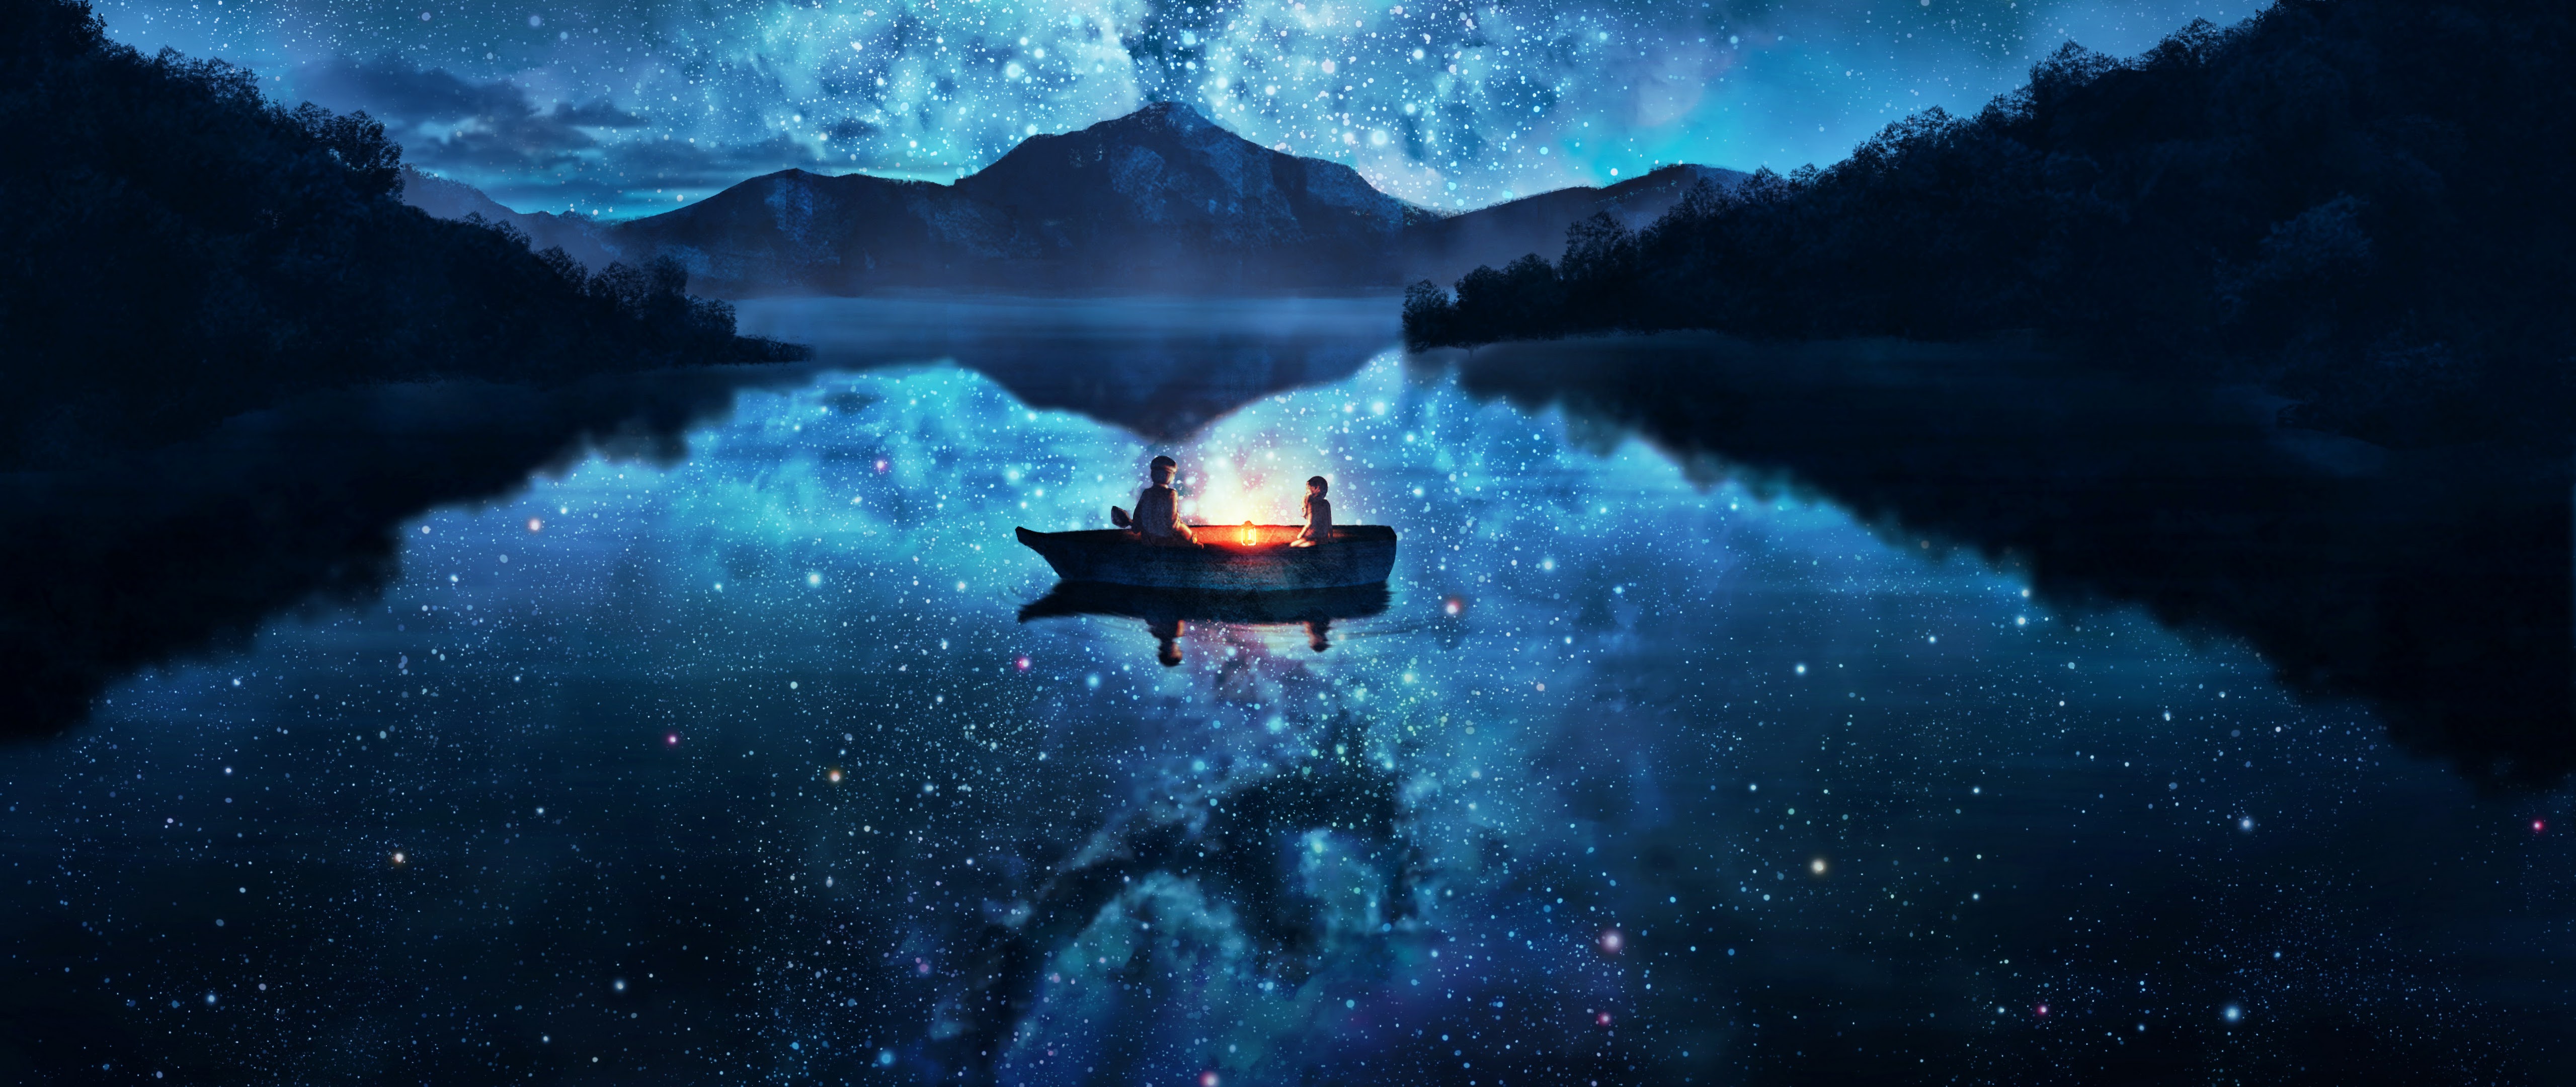 Anime Scenery Lake Night Stars 4K Wallpaper